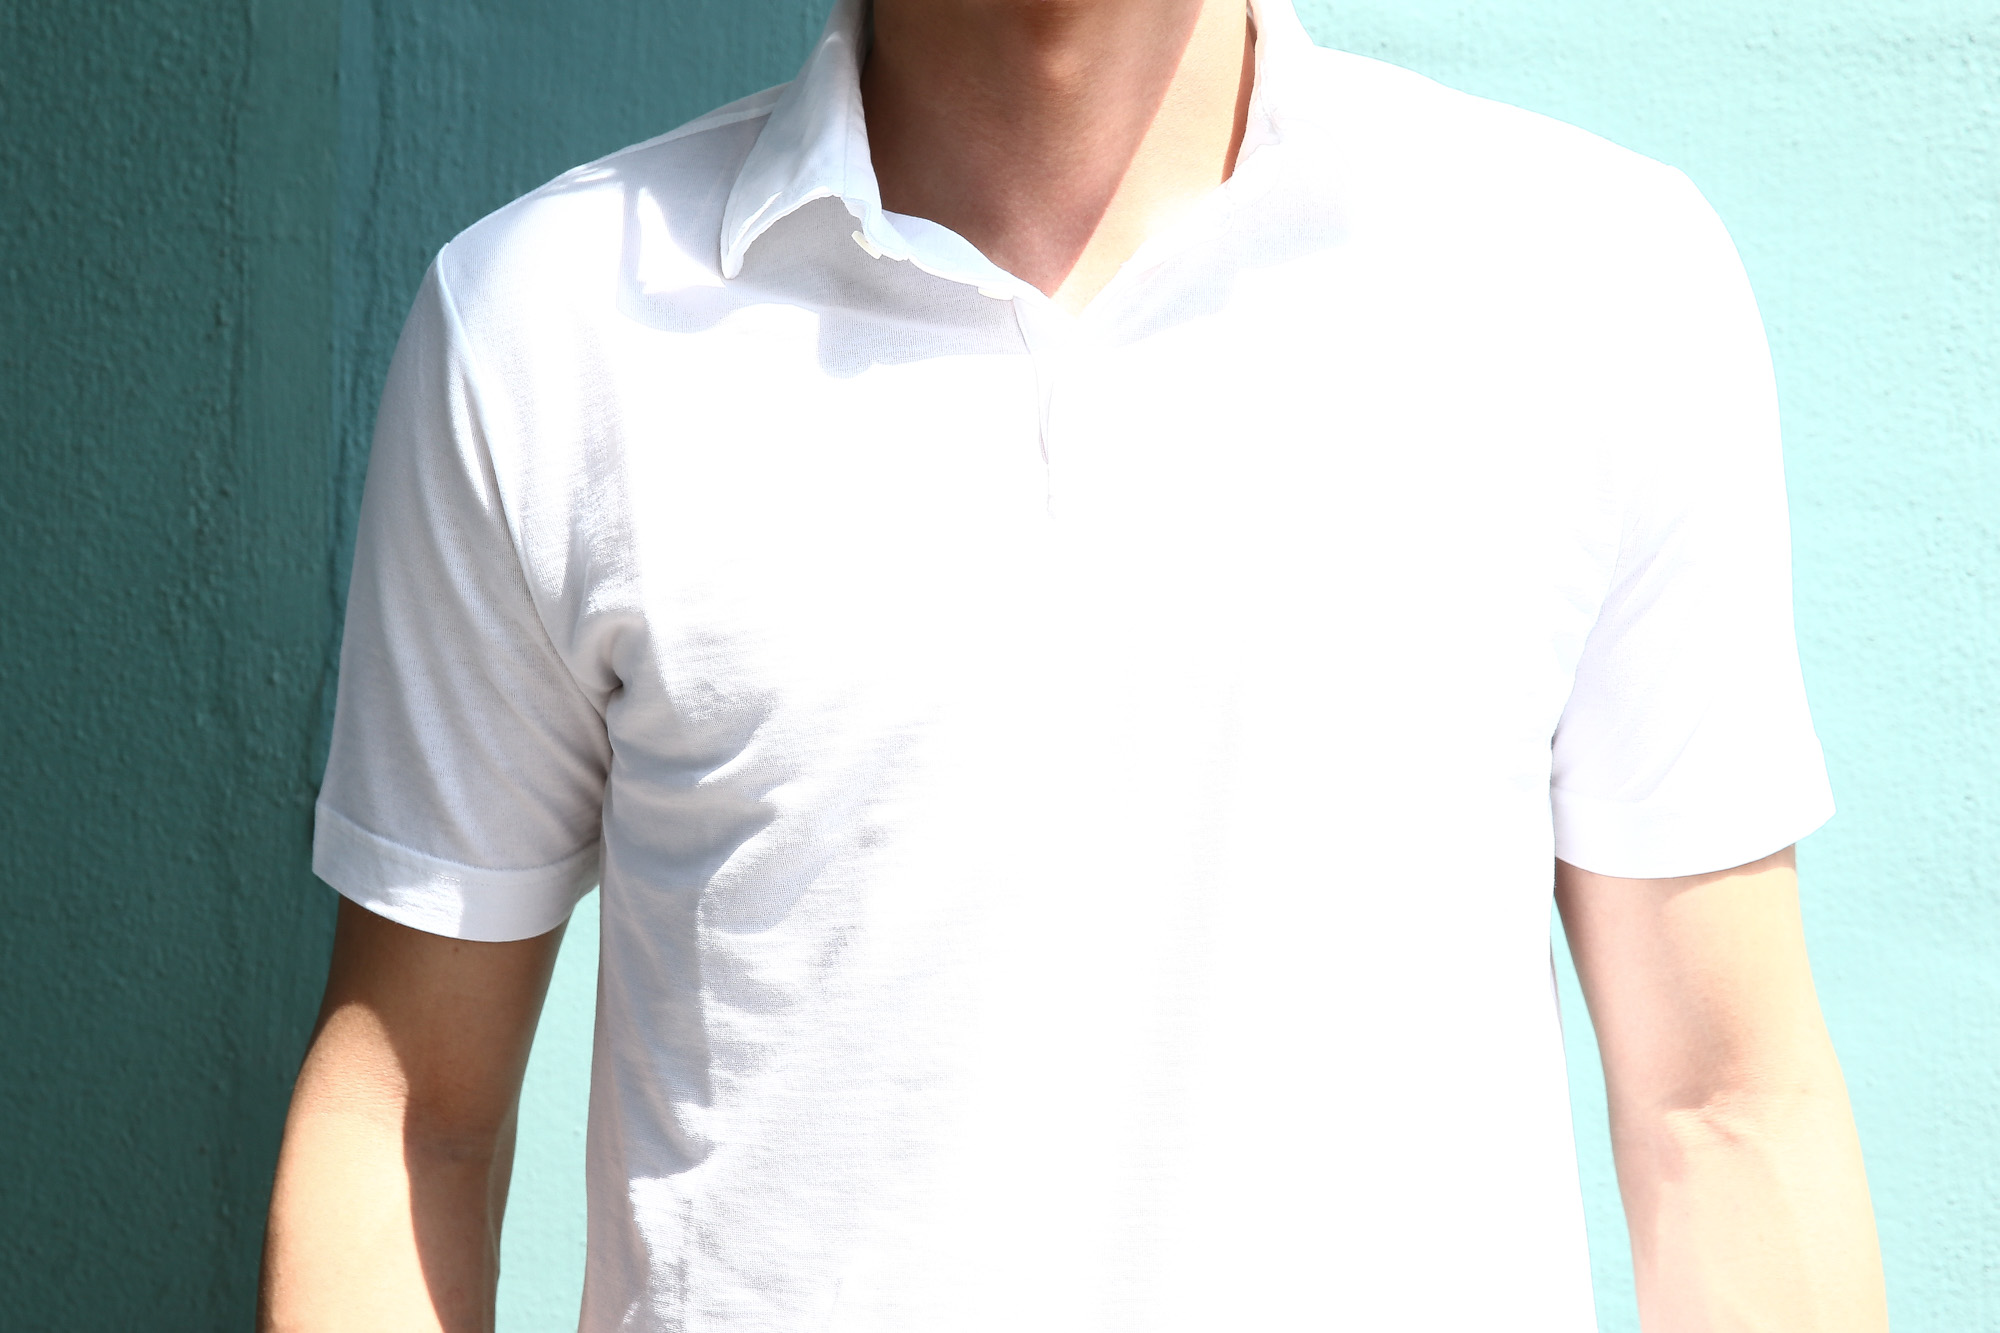 ZANONE (ザノーネ) Polo Shirt ice cotton アイスコットン ポロシャツ WHITE (ホワイト・Z0001) made in italy (イタリア製) 2018 春夏新作 愛知 名古屋 Alto e Diritto アルト エ デリット ポロ ニットポロ